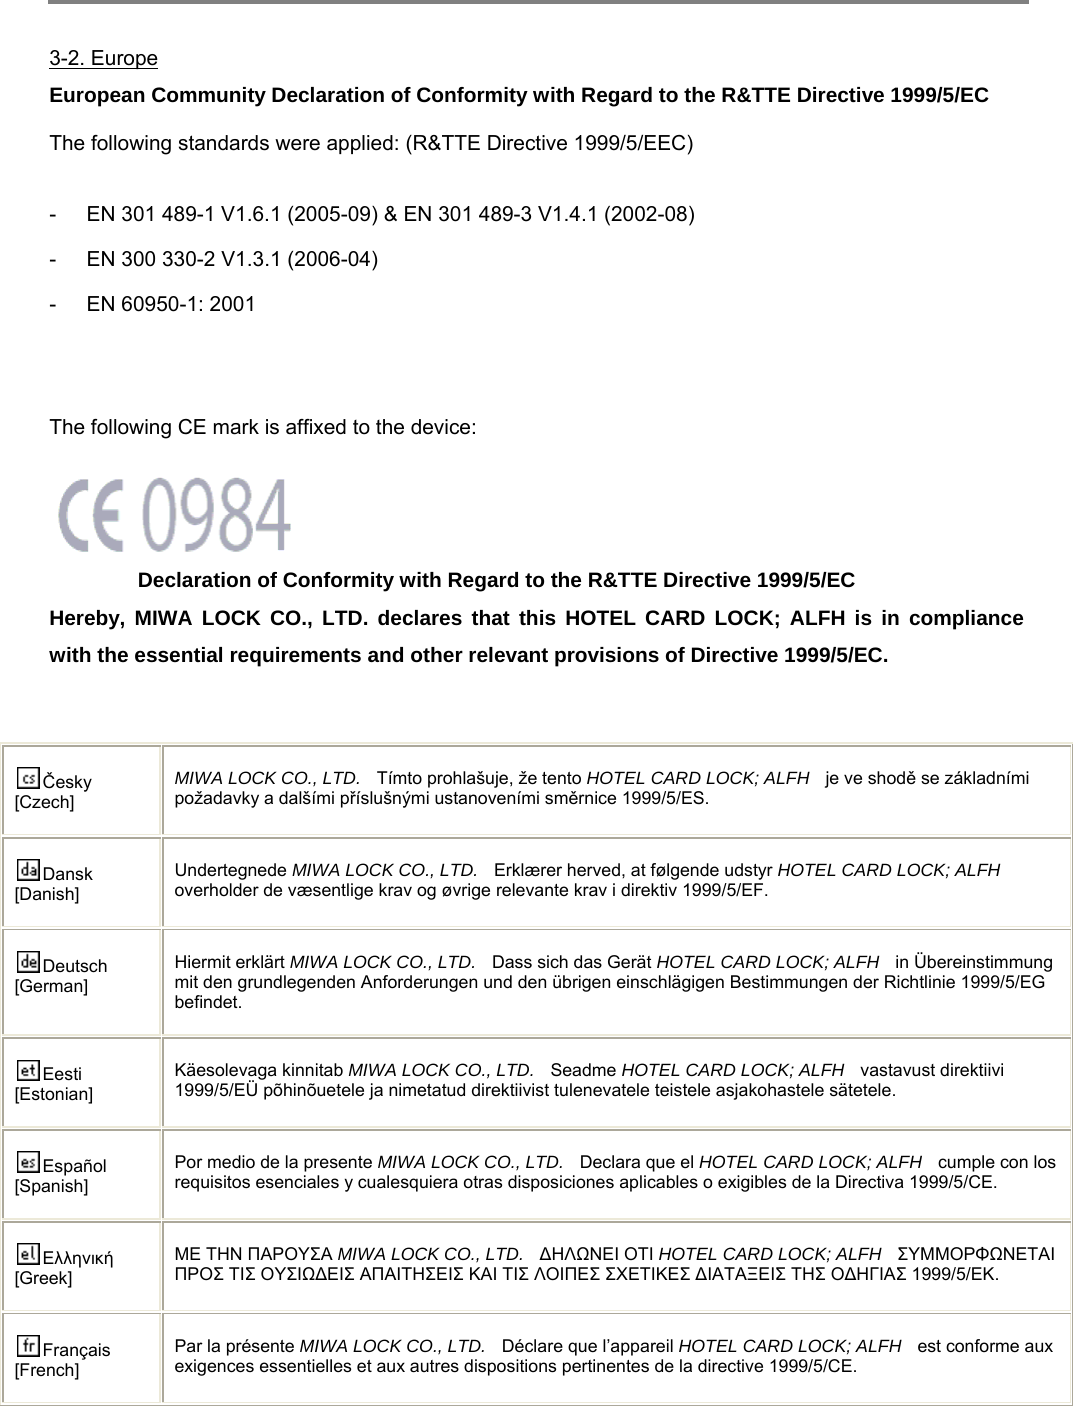        3-2. Europe European Community Declaration of Conformity with Regard to the R&amp;TTE Directive 1999/5/EC The following standards were applied: (R&amp;TTE Directive 1999/5/EEC)    -  EN 301 489-1 V1.6.1 (2005-09) &amp; EN 301 489-3 V1.4.1 (2002-08) -  EN 300 330-2 V1.3.1 (2006-04) -  EN 60950-1: 2001   The following CE mark is affixed to the device:     Declaration of Conformity with Regard to the R&amp;TTE Directive 1999/5/EC   Hereby, MIWA LOCK CO., LTD. declares that this HOTEL CARD LOCK; ALFH is in compliance with the essential requirements and other relevant provisions of Directive 1999/5/EC.   Česky [Czech] MIWA LOCK CO., LTD.    Tímto prohlašuje, že tento HOTEL CARD LOCK; ALFH    je ve shodě se základními požadavky a dalšími příslušnými ustanoveními směrnice 1999/5/ES. Dansk [Danish] Undertegnede MIWA LOCK CO., LTD.    Erklærer herved, at følgende udstyr HOTEL CARD LOCK; ALFH overholder de væsentlige krav og øvrige relevante krav i direktiv 1999/5/EF. Deutsch [German] Hiermit erklärt MIWA LOCK CO., LTD.    Dass sich das Gerät HOTEL CARD LOCK; ALFH   in Übereinstimmung mit den grundlegenden Anforderungen und den übrigen einschlägigen Bestimmungen der Richtlinie 1999/5/EG befindet. Eesti [Estonian] Käesolevaga kinnitab MIWA LOCK CO., LTD.   Seadme HOTEL CARD LOCK; ALFH   vastavust direktiivi 1999/5/EÜ põhinõuetele ja nimetatud direktiivist tulenevatele teistele asjakohastele sätetele. Español [Spanish] Por medio de la presente MIWA LOCK CO., LTD.    Declara que el HOTEL CARD LOCK; ALFH   cumple con los requisitos esenciales y cualesquiera otras disposiciones aplicables o exigibles de la Directiva 1999/5/CE. Ελληνική [Greek] ΜΕ ΤΗΝ ΠΑΡΟΥΣΑ MIWA LOCK CO., LTD.   ΔΗΛΩΝΕΙ ΟΤΙ HOTEL CARD LOCK; ALFH  ΣΥΜΜΟΡΦΩΝΕΤΑΙ ΠΡΟΣ ΤΙΣ ΟΥΣΙΩΔΕΙΣ ΑΠΑΙΤΗΣΕΙΣ ΚΑΙ ΤΙΣ ΛΟΙΠΕΣ ΣΧΕΤΙΚΕΣ ΔΙΑΤΑΞΕΙΣ ΤΗΣ ΟΔΗΓΙΑΣ 1999/5/ΕΚ. Français [French] Par la présente MIWA LOCK CO., LTD.    Déclare que l’appareil HOTEL CARD LOCK; ALFH   est conforme aux exigences essentielles et aux autres dispositions pertinentes de la directive 1999/5/CE. 